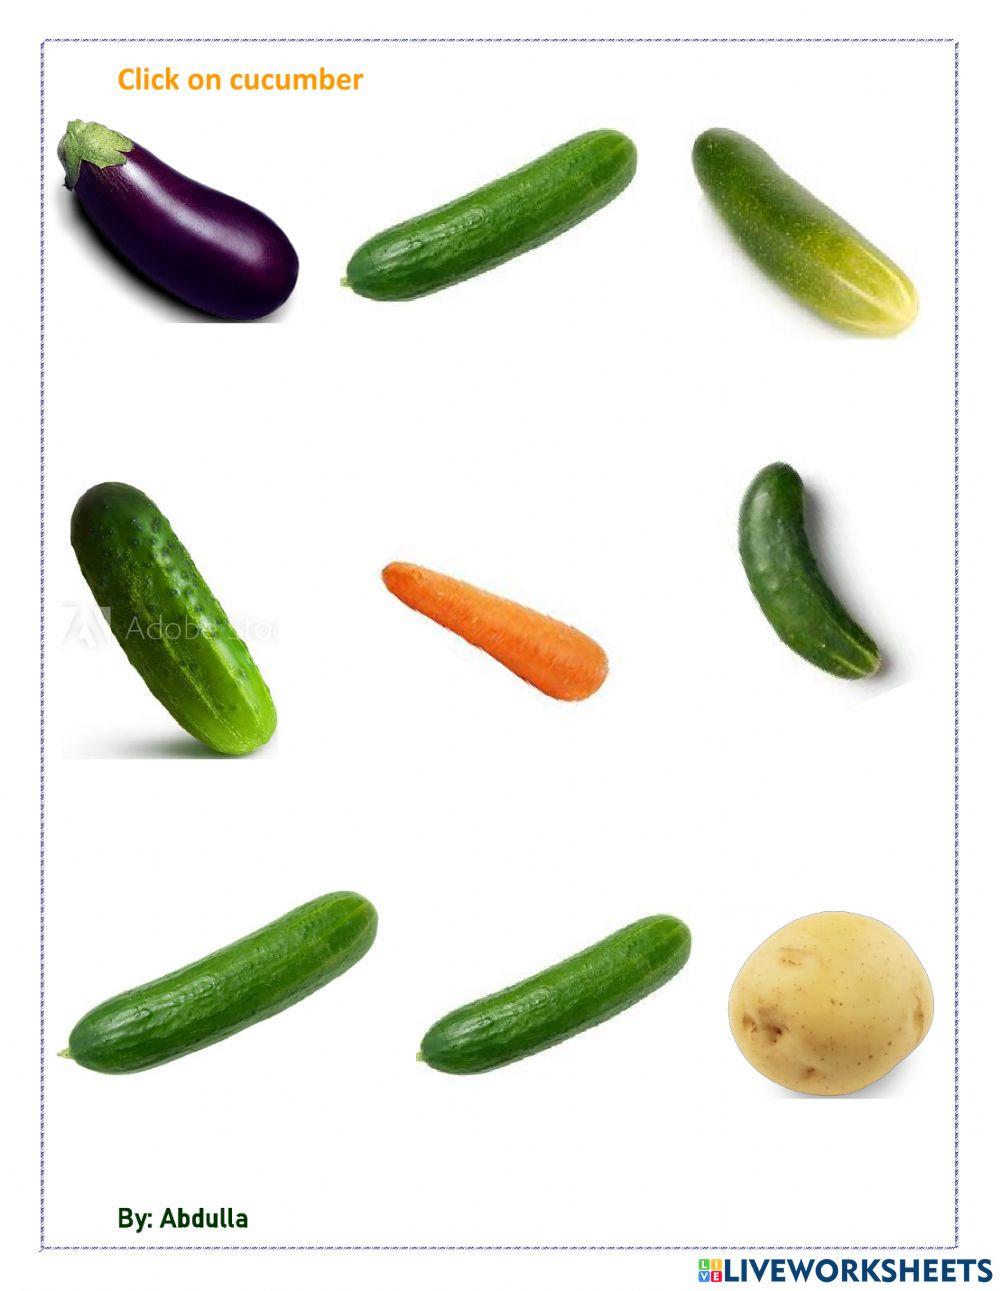 Identify cucumber